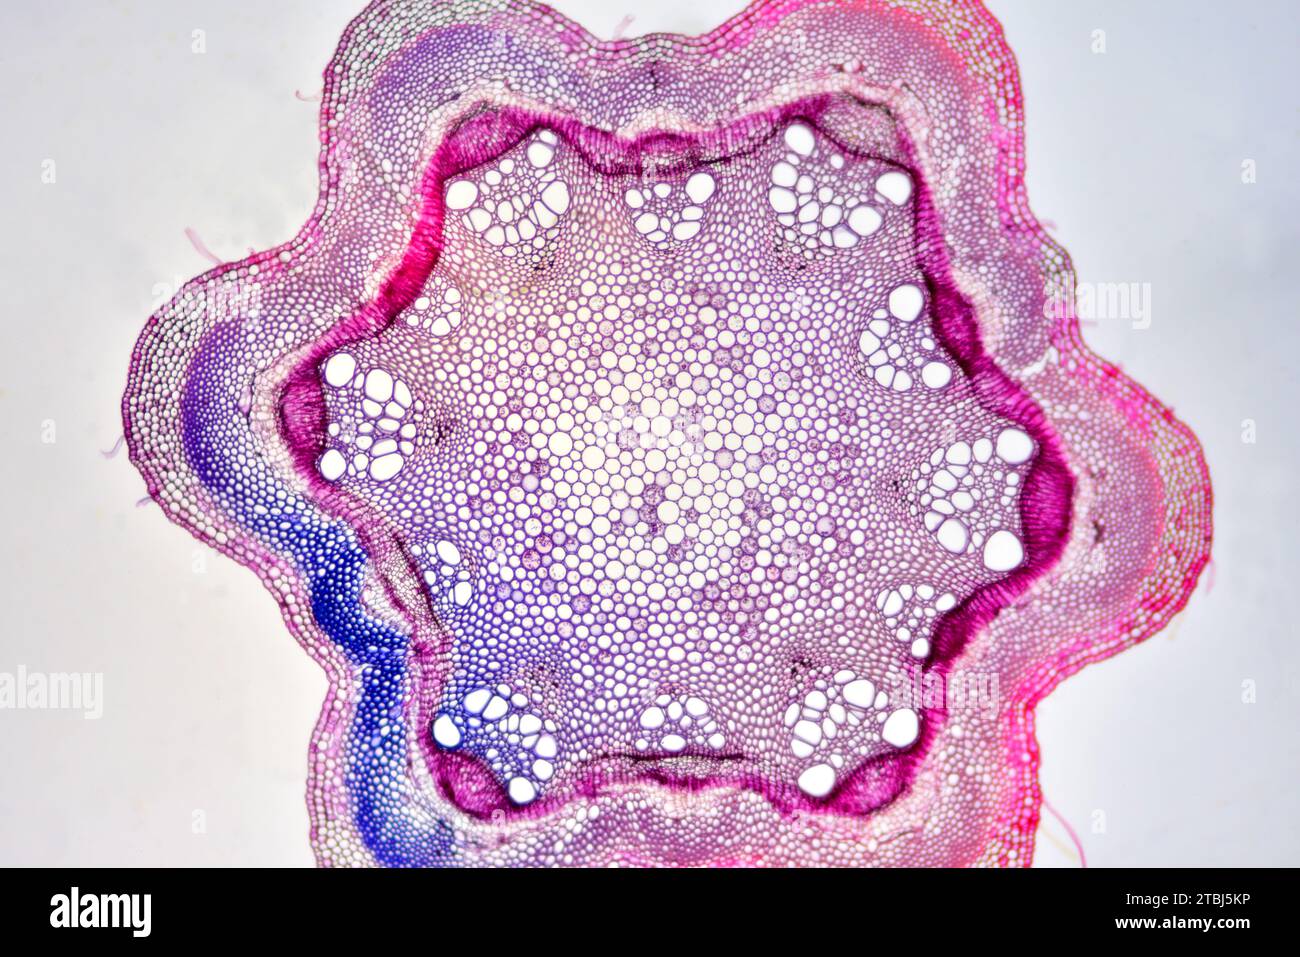 Eudicot stem (Clematis sp.) showing epidermis, collenchyma, cortex, parenchyma, pith, phloem and xylem. Optical microscope X40. Stock Photo